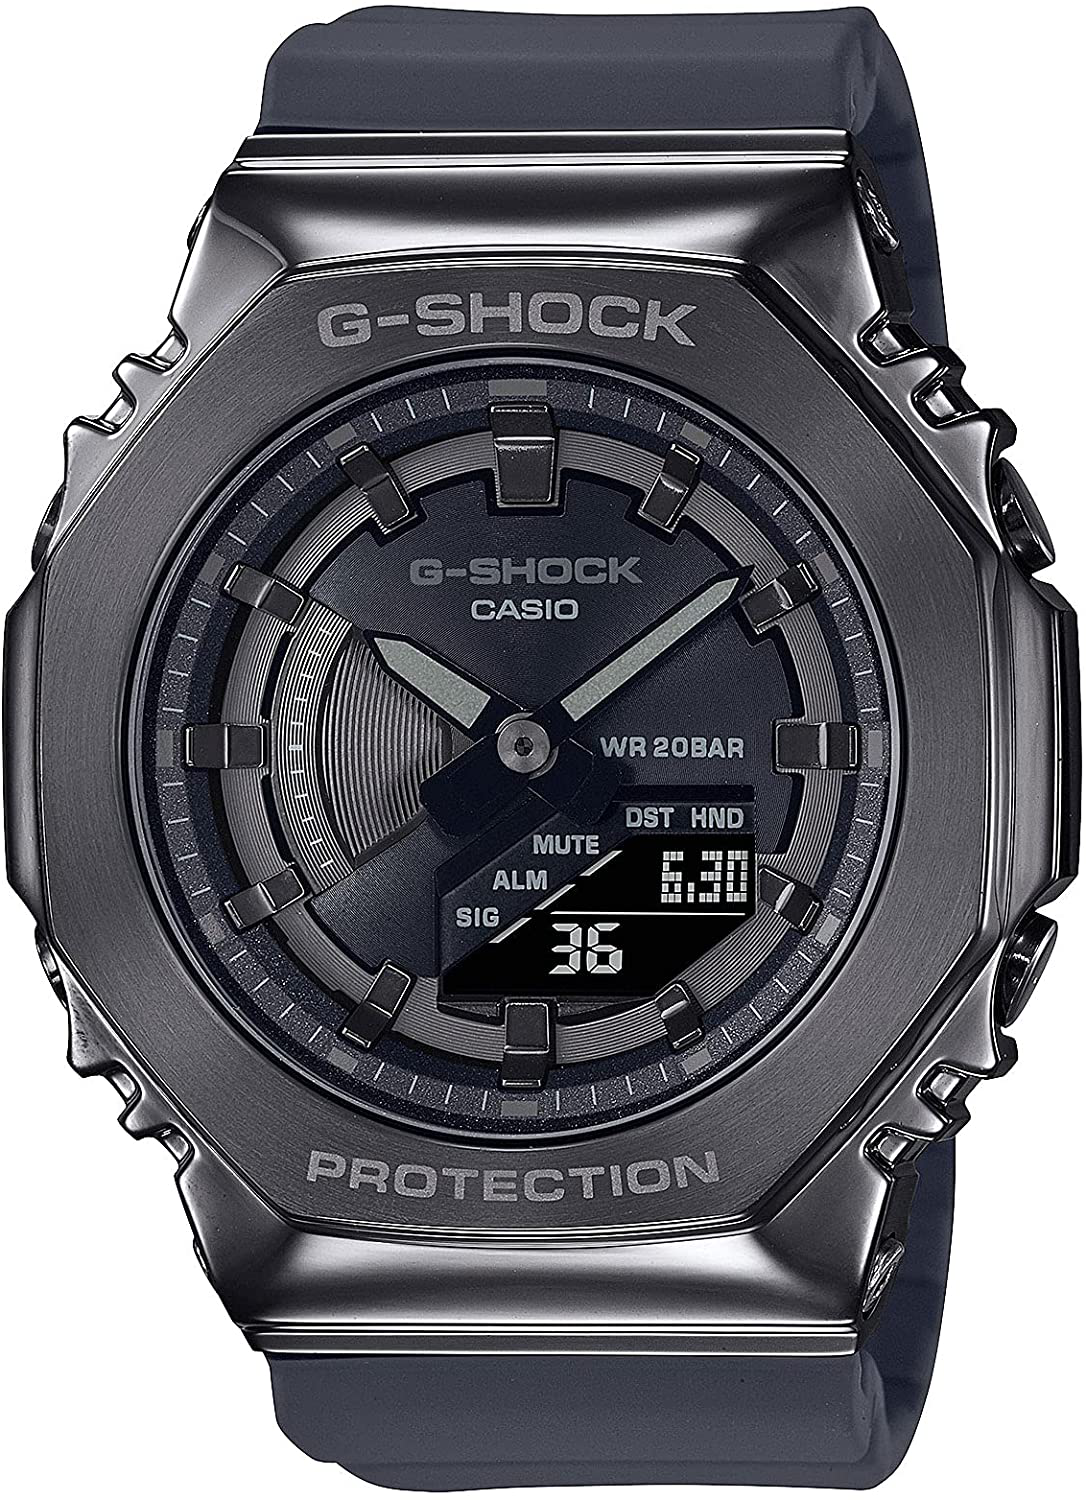 G Shock G ShockxA0 Analog Digital Dark Gray IP Stainless Steel Watch Black Resin Band